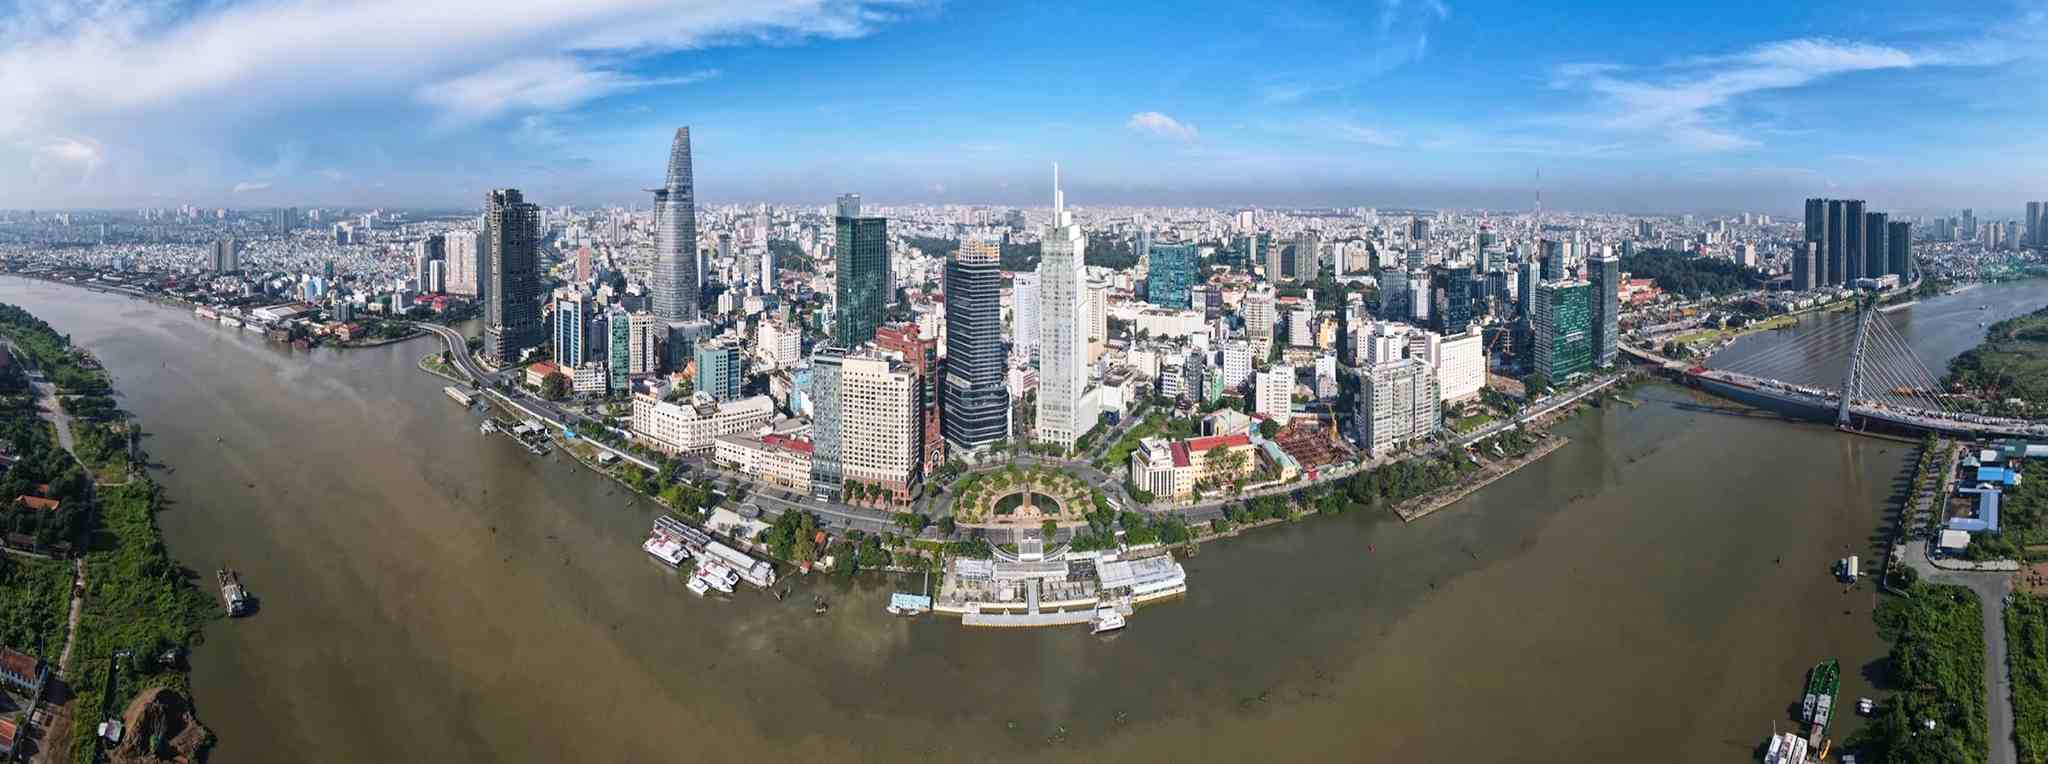 Urban expectations along the Saigon River-compressed (1)